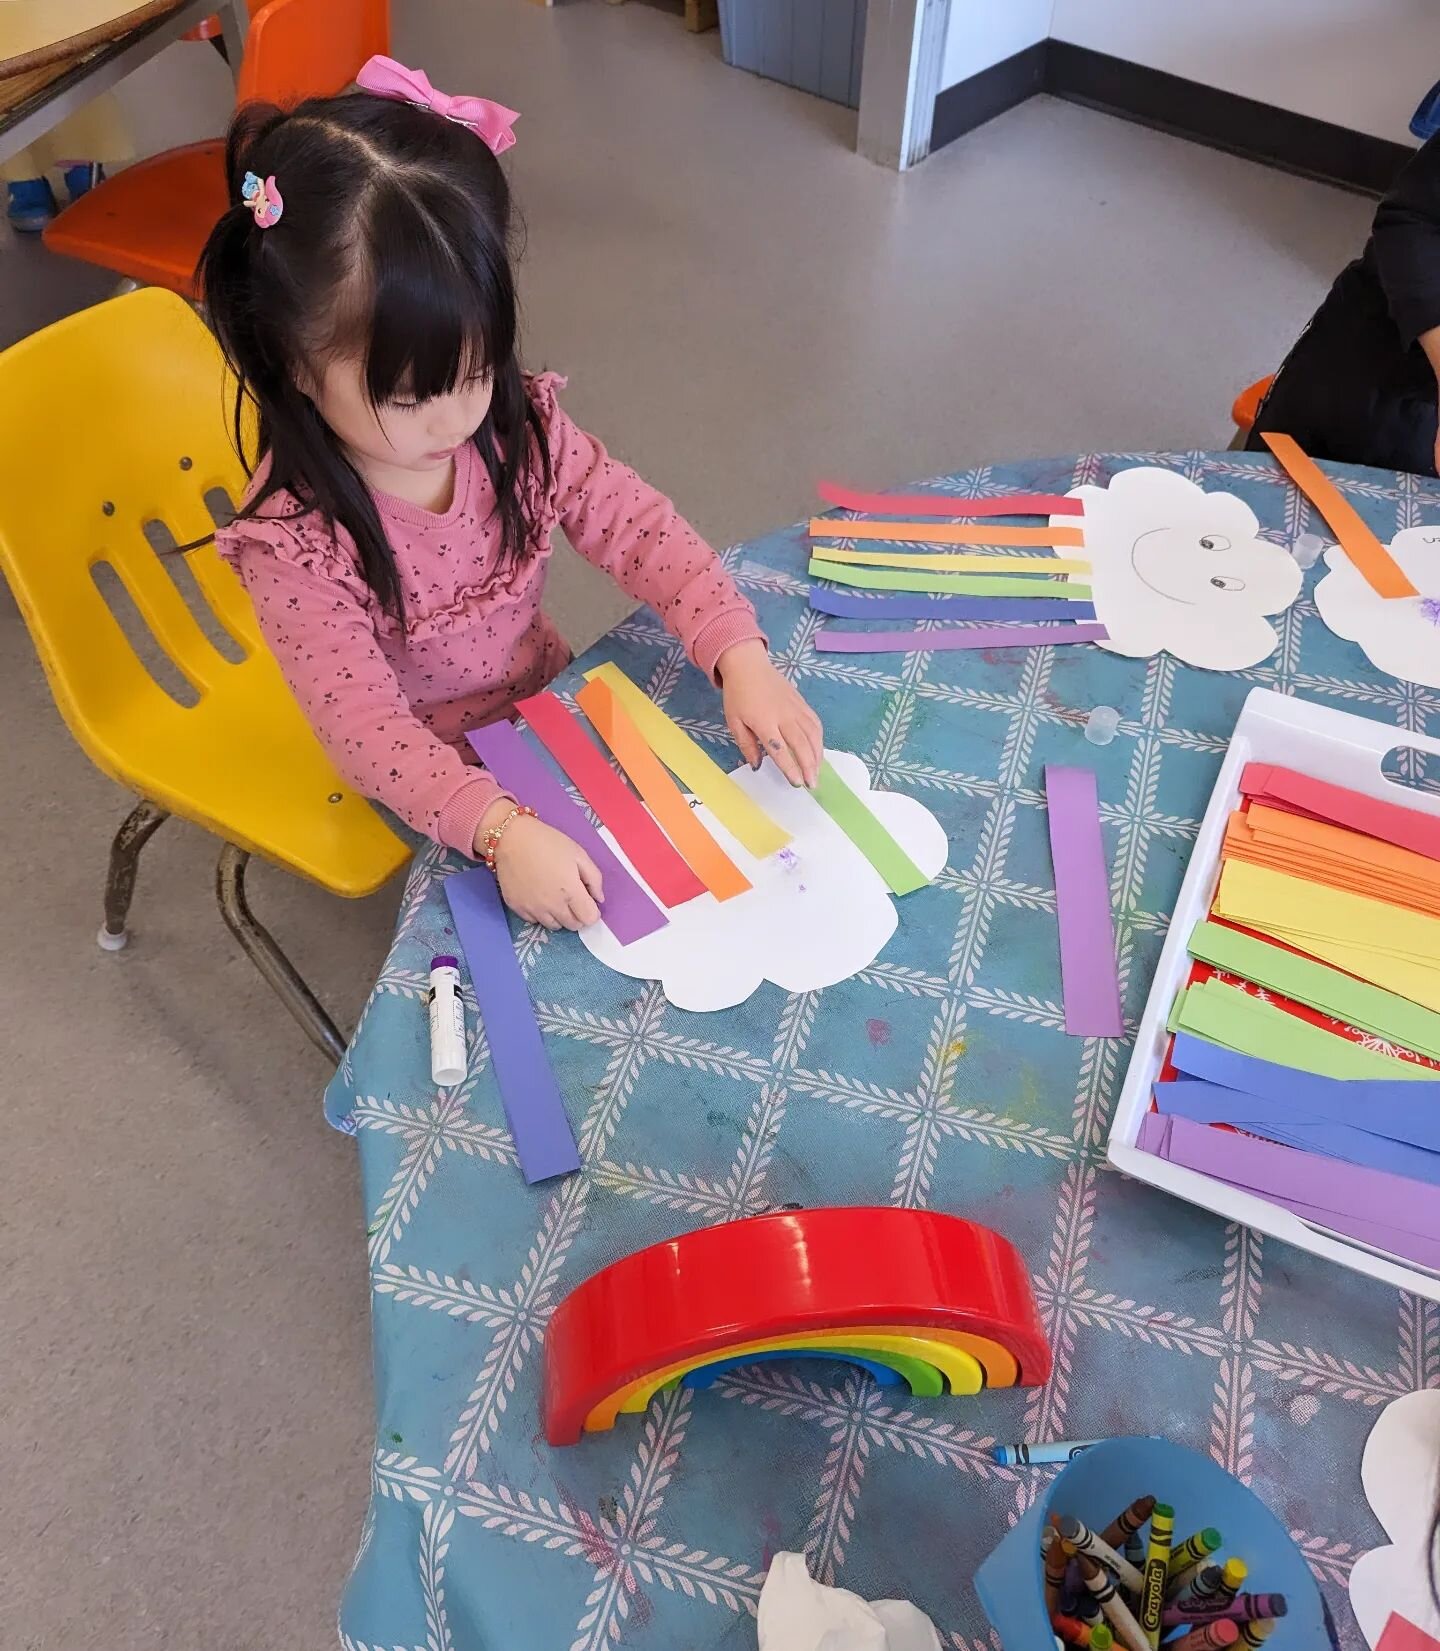 Working on some pretty cute rainbow art 🌈
#playbasedpreschool #preschoolart